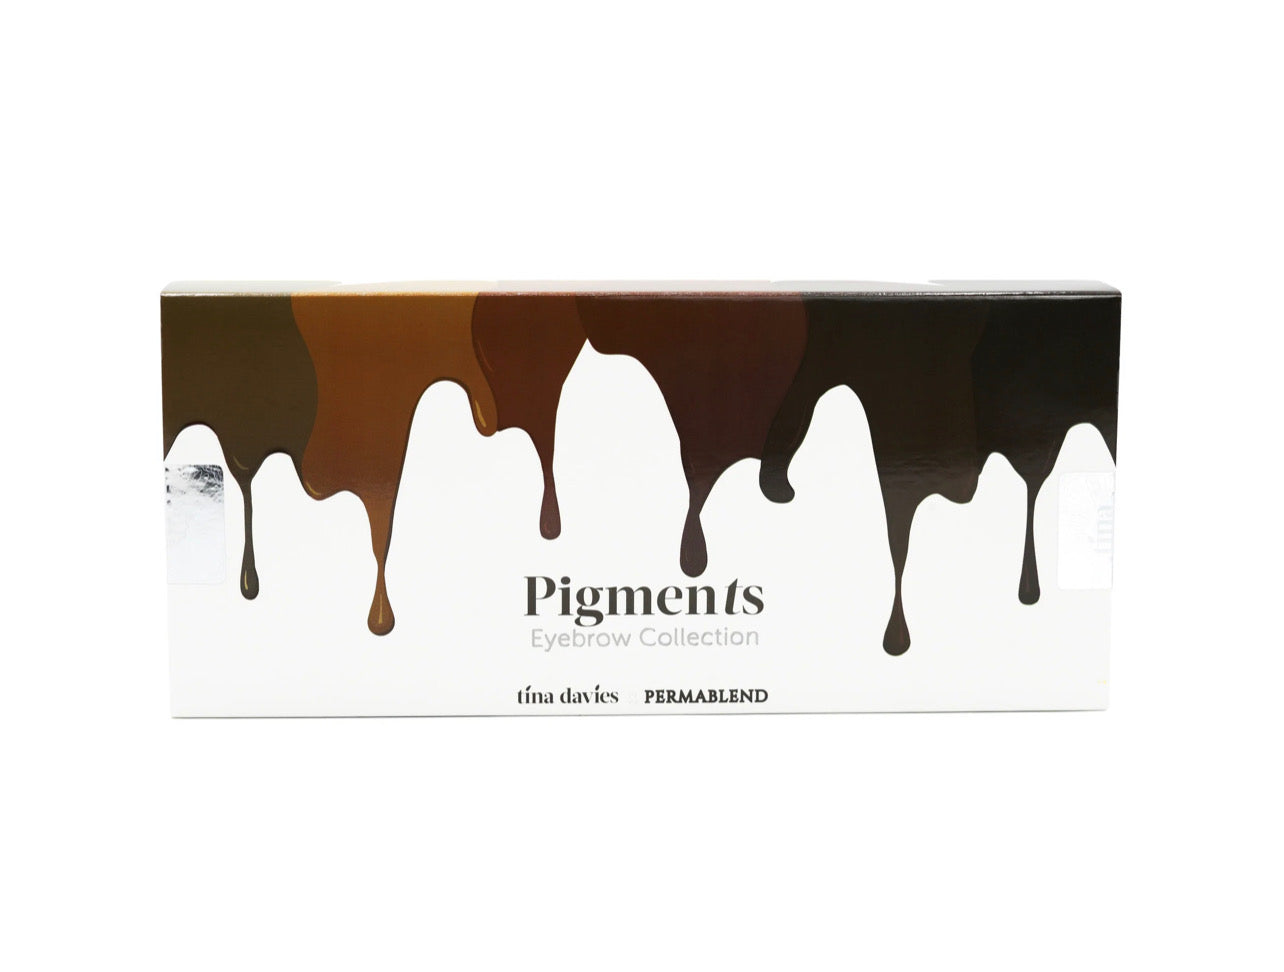 Kit básico de pigmentos Permablend x Tina Davies para cejas y labios